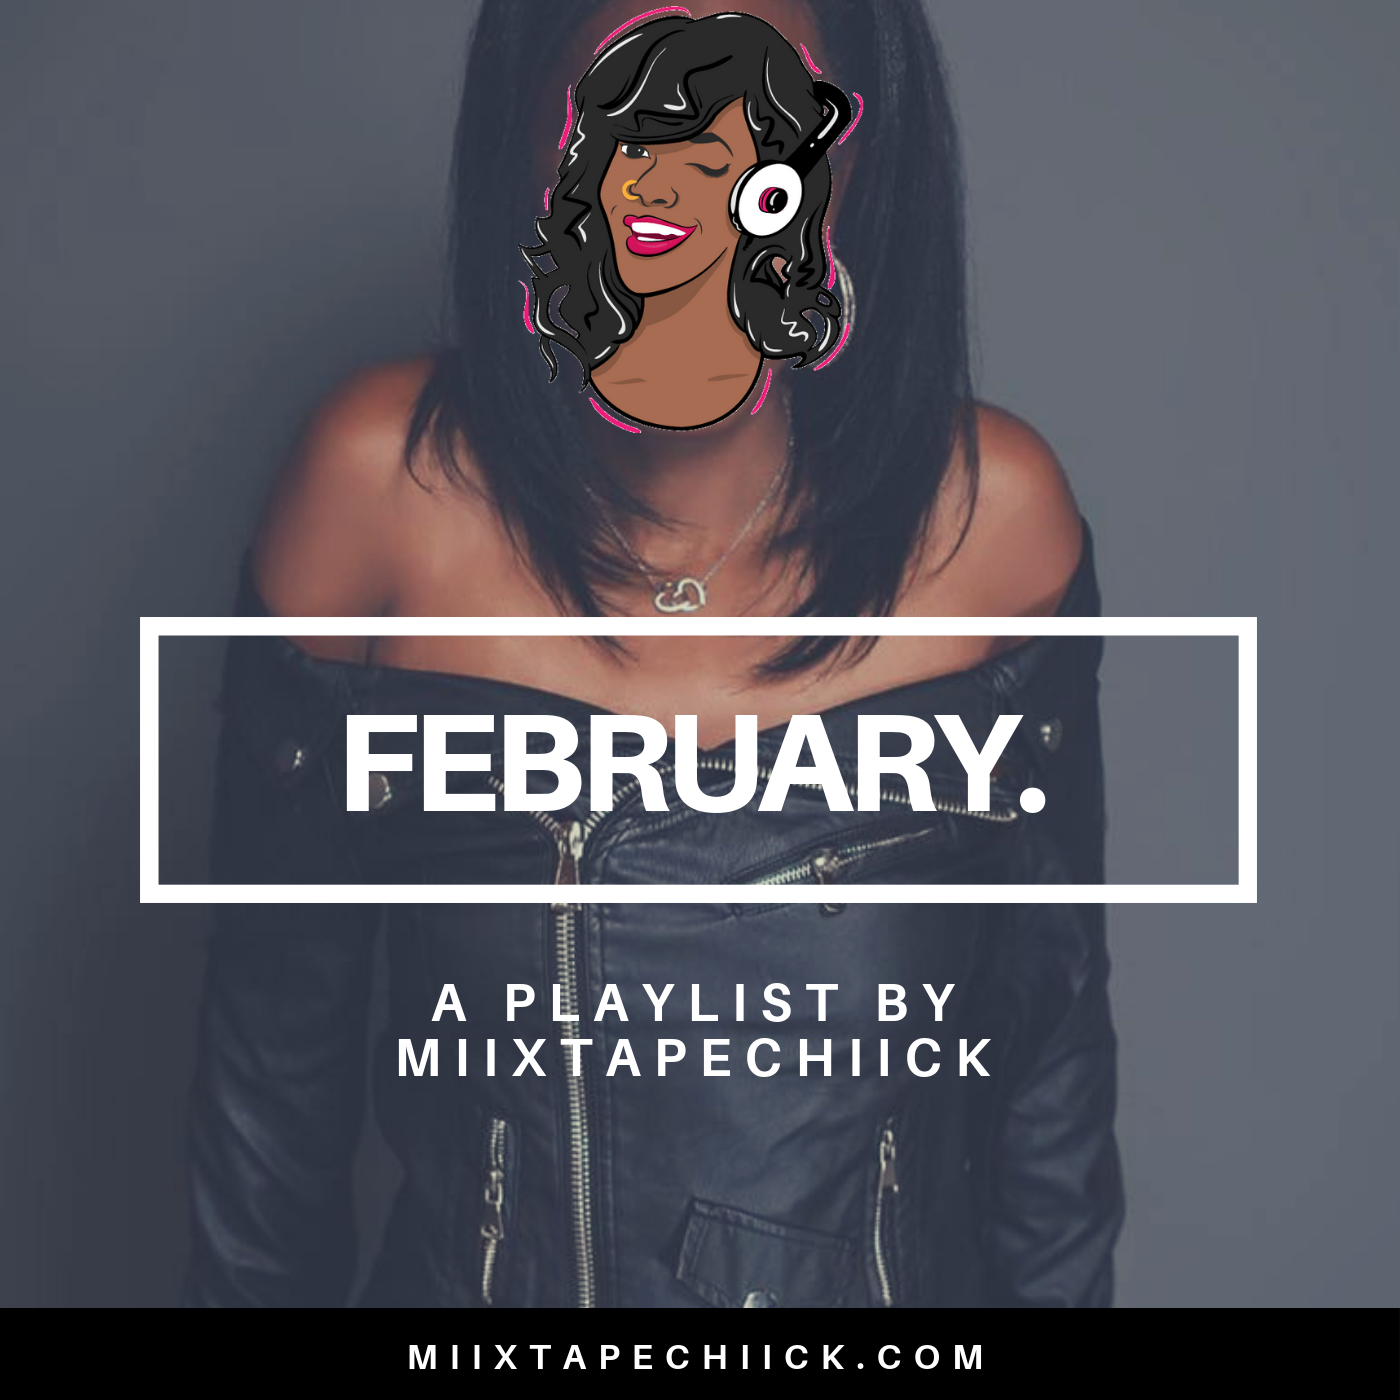 miixtapechiick | February Playlist